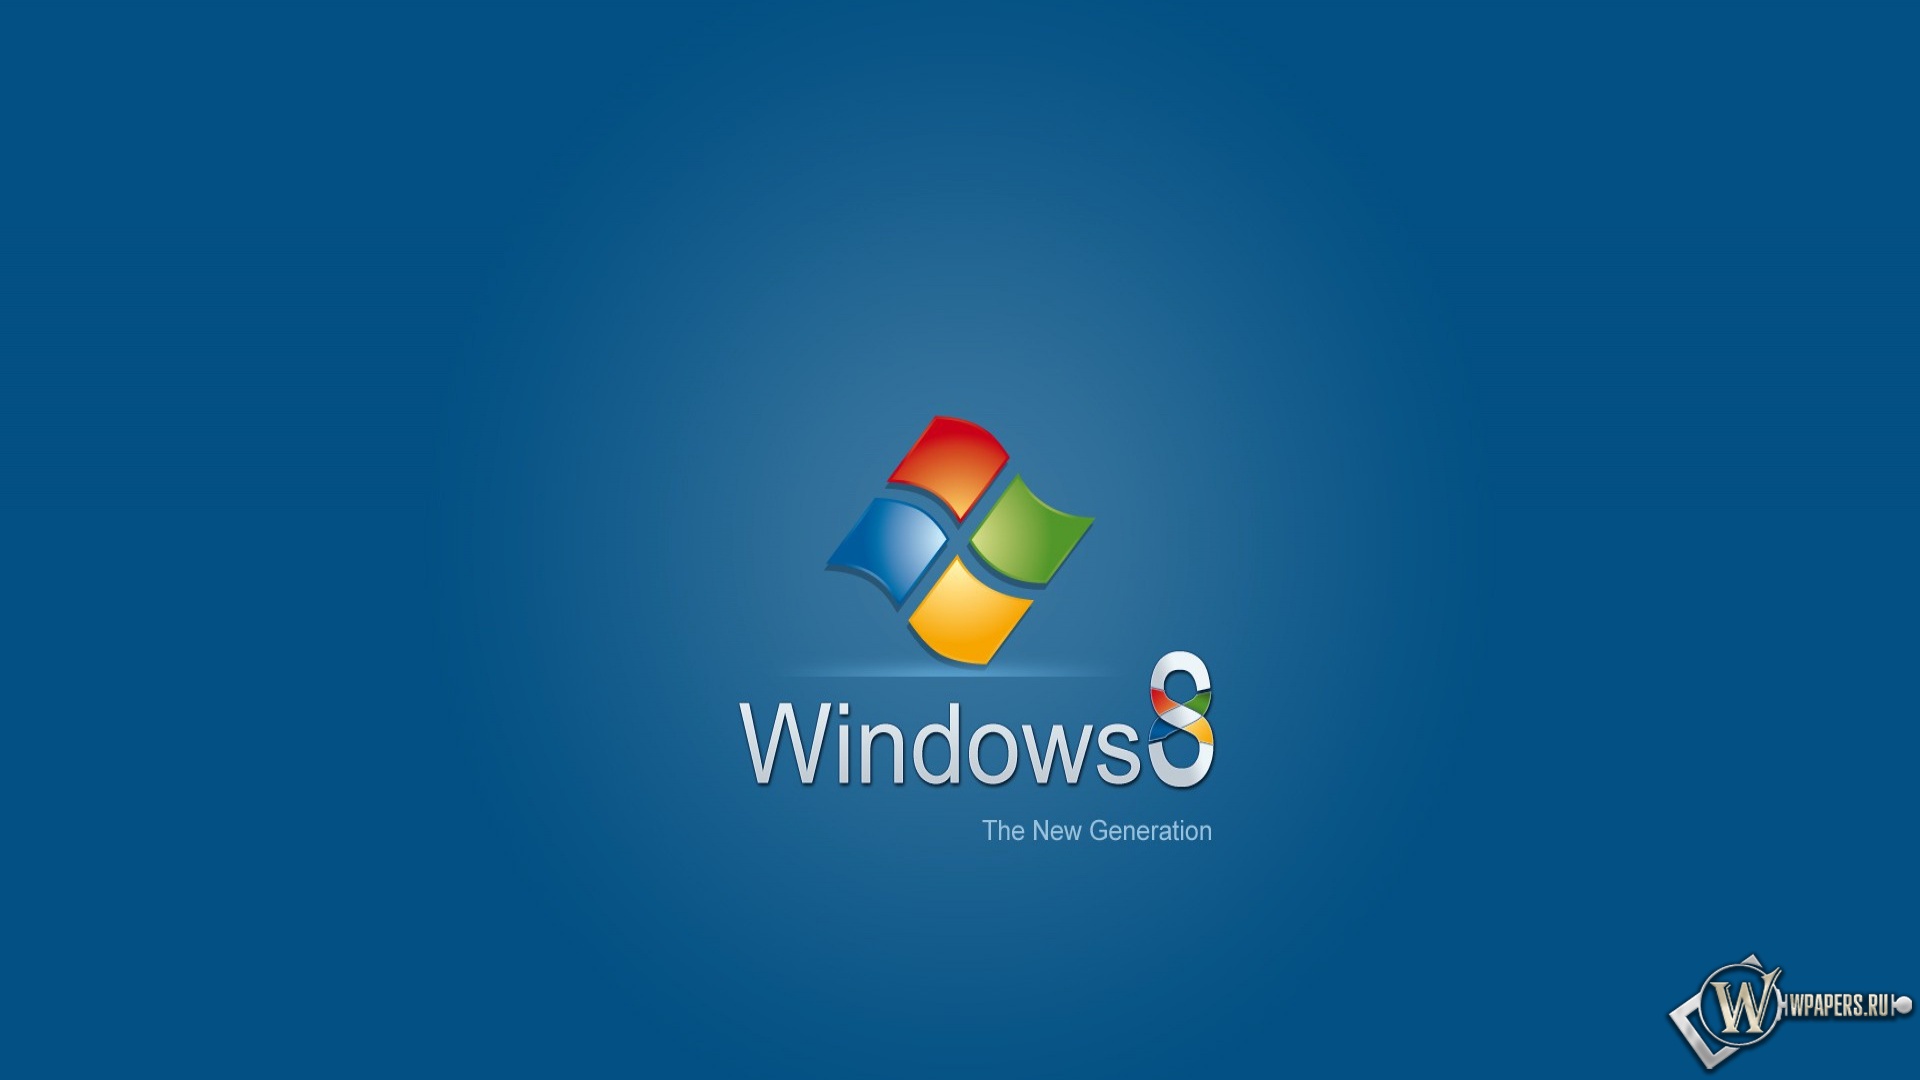 Windows Professional Wallpaper